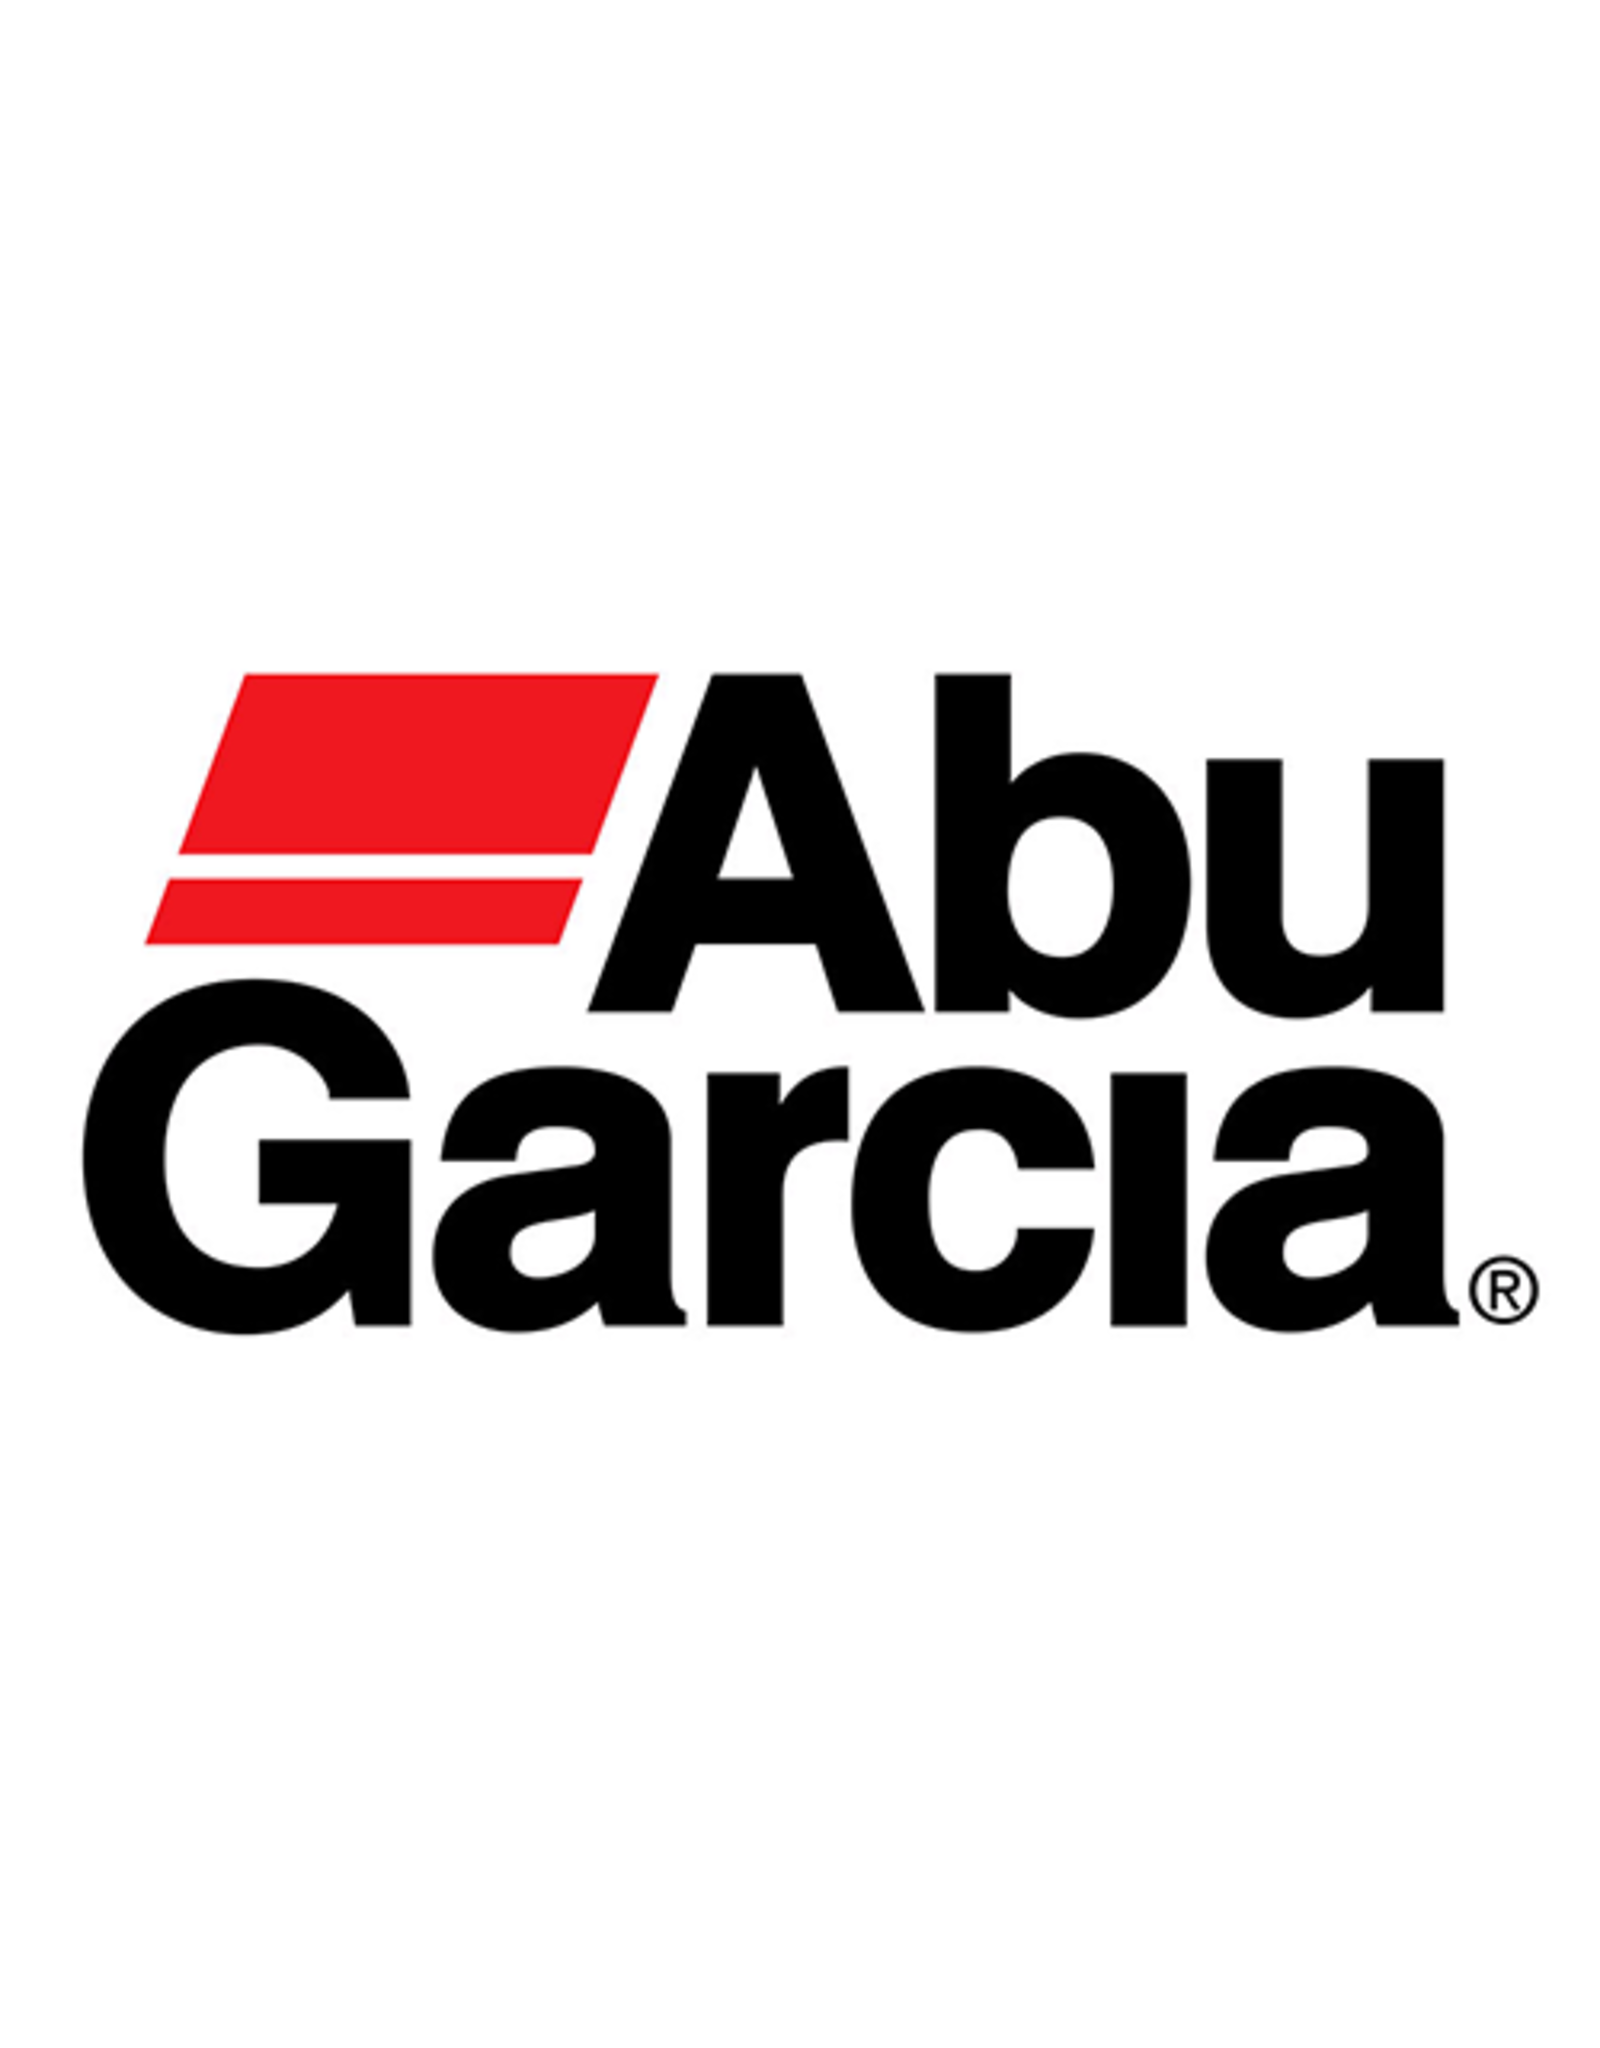 Abu Garcia 1125800  FRAME COMPLETE